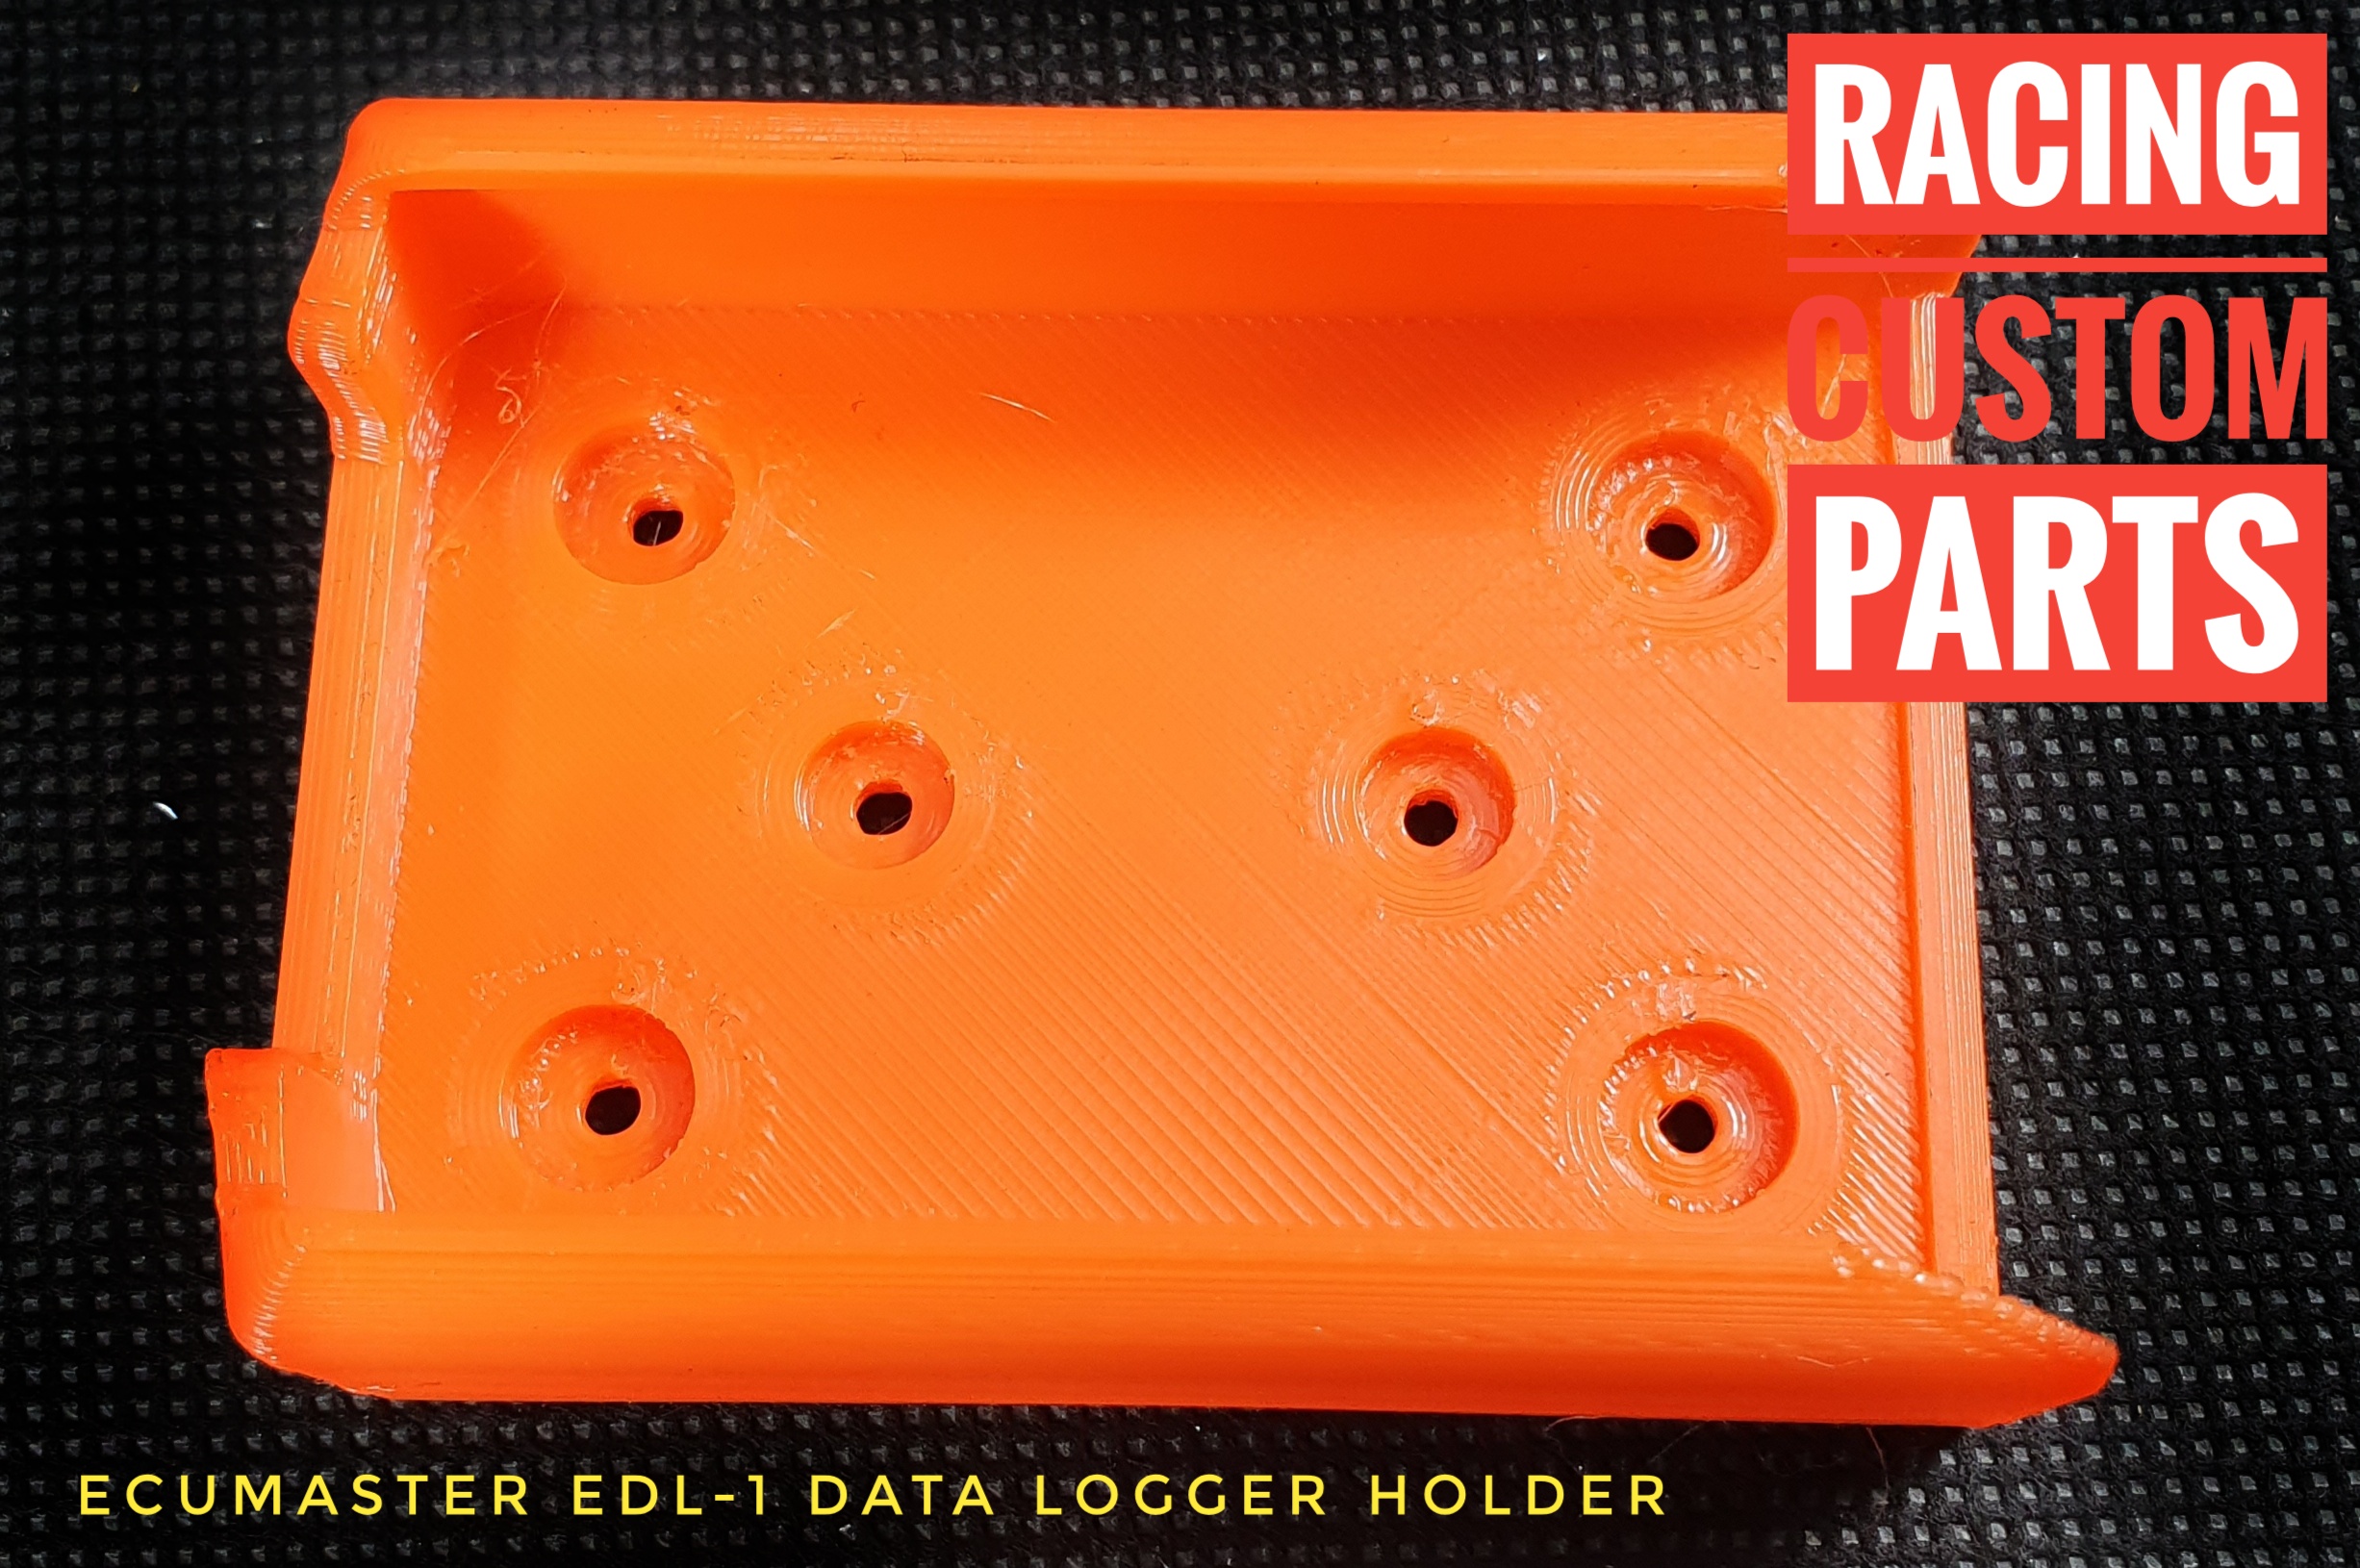 Ecumaster EDL-1 Data logger holder racing custom parts 3d printed parts